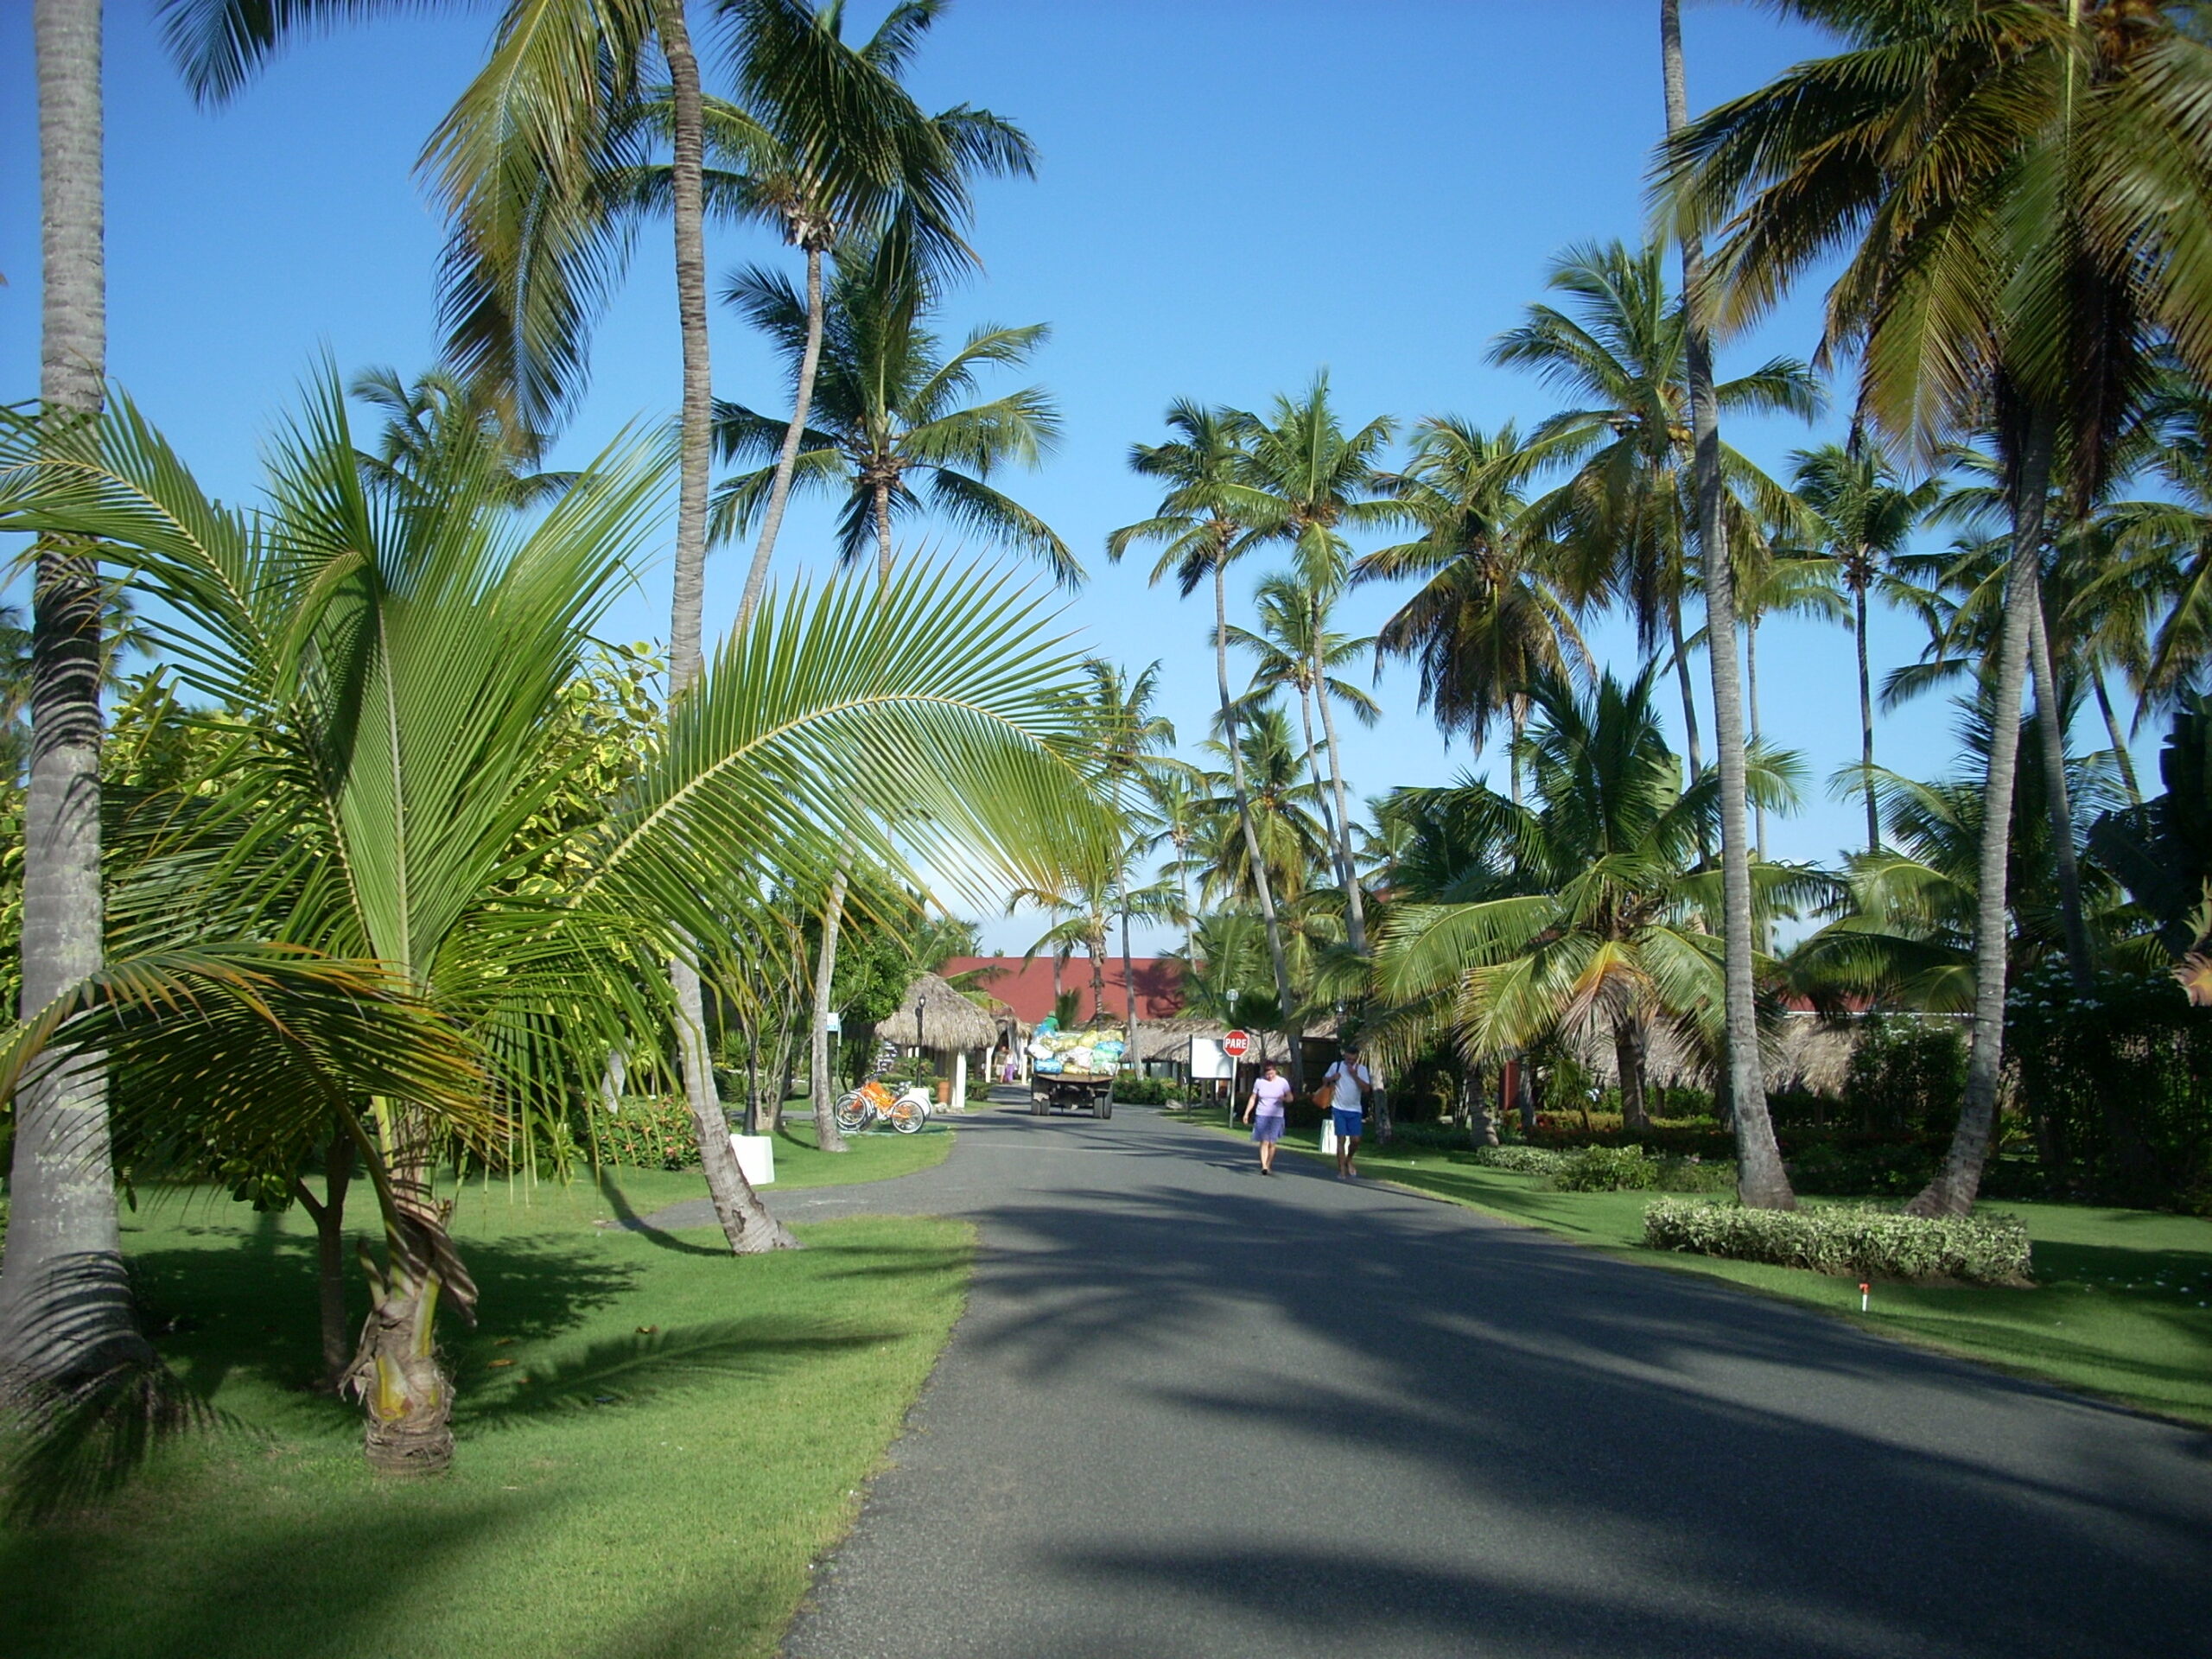 Dominican Republic- Punta Cana